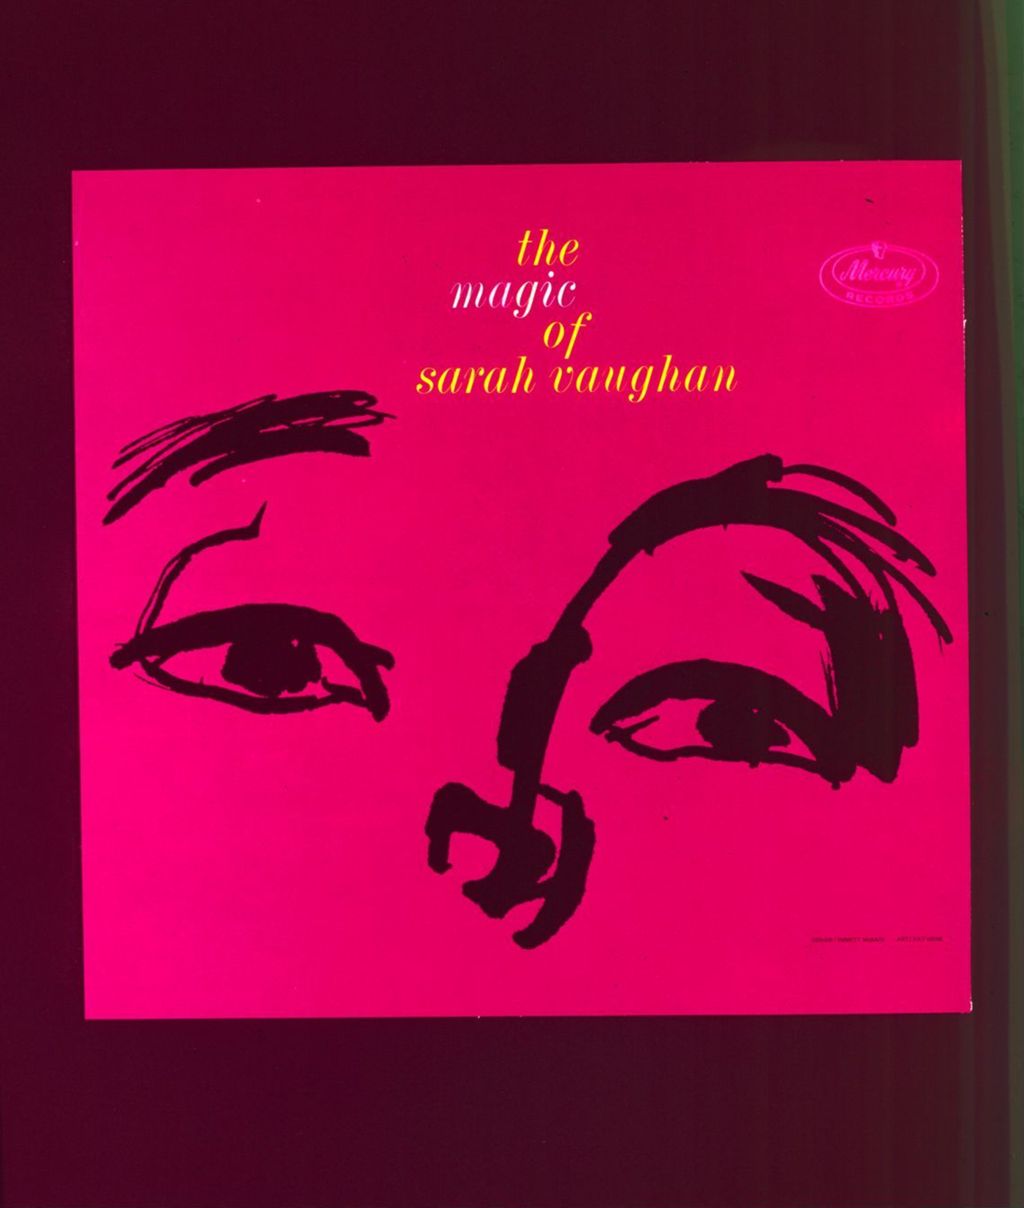 Miniature of The magic of Sarah Vaughan, album cover